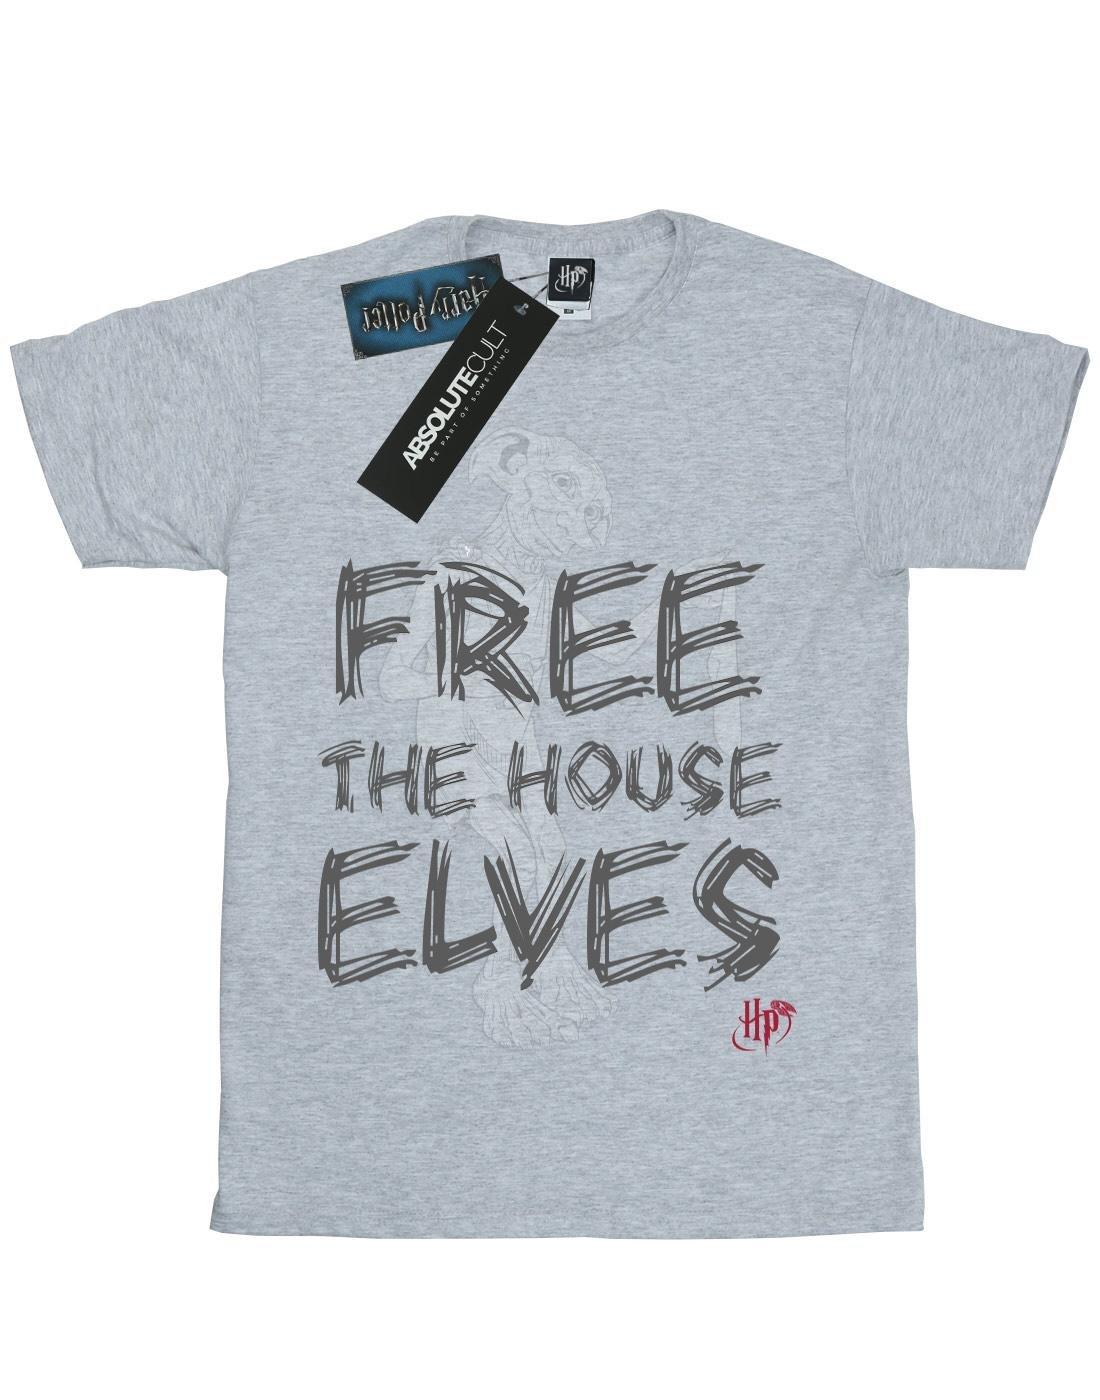 Dobby Free The House Elves Tshirt Herren Grau 3XL von Harry Potter